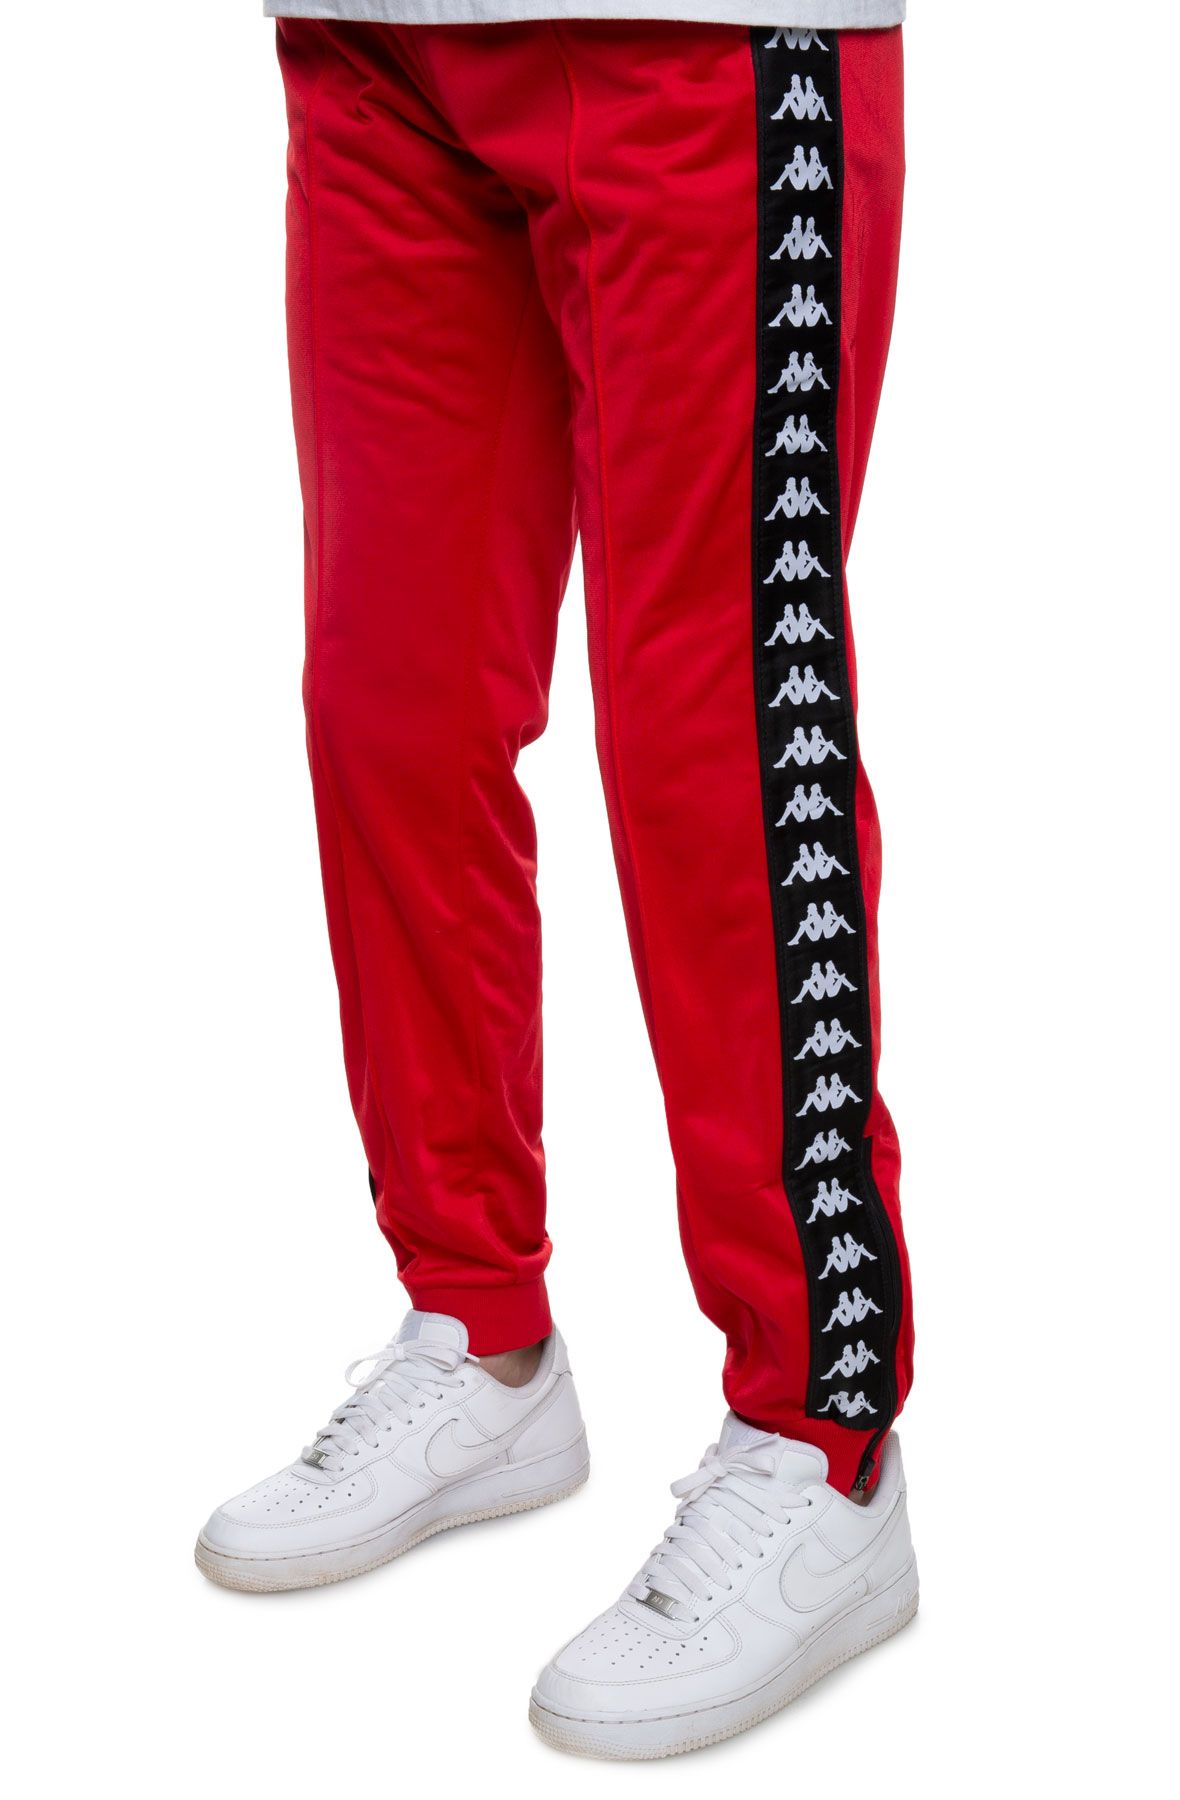 red kappa track pants mens